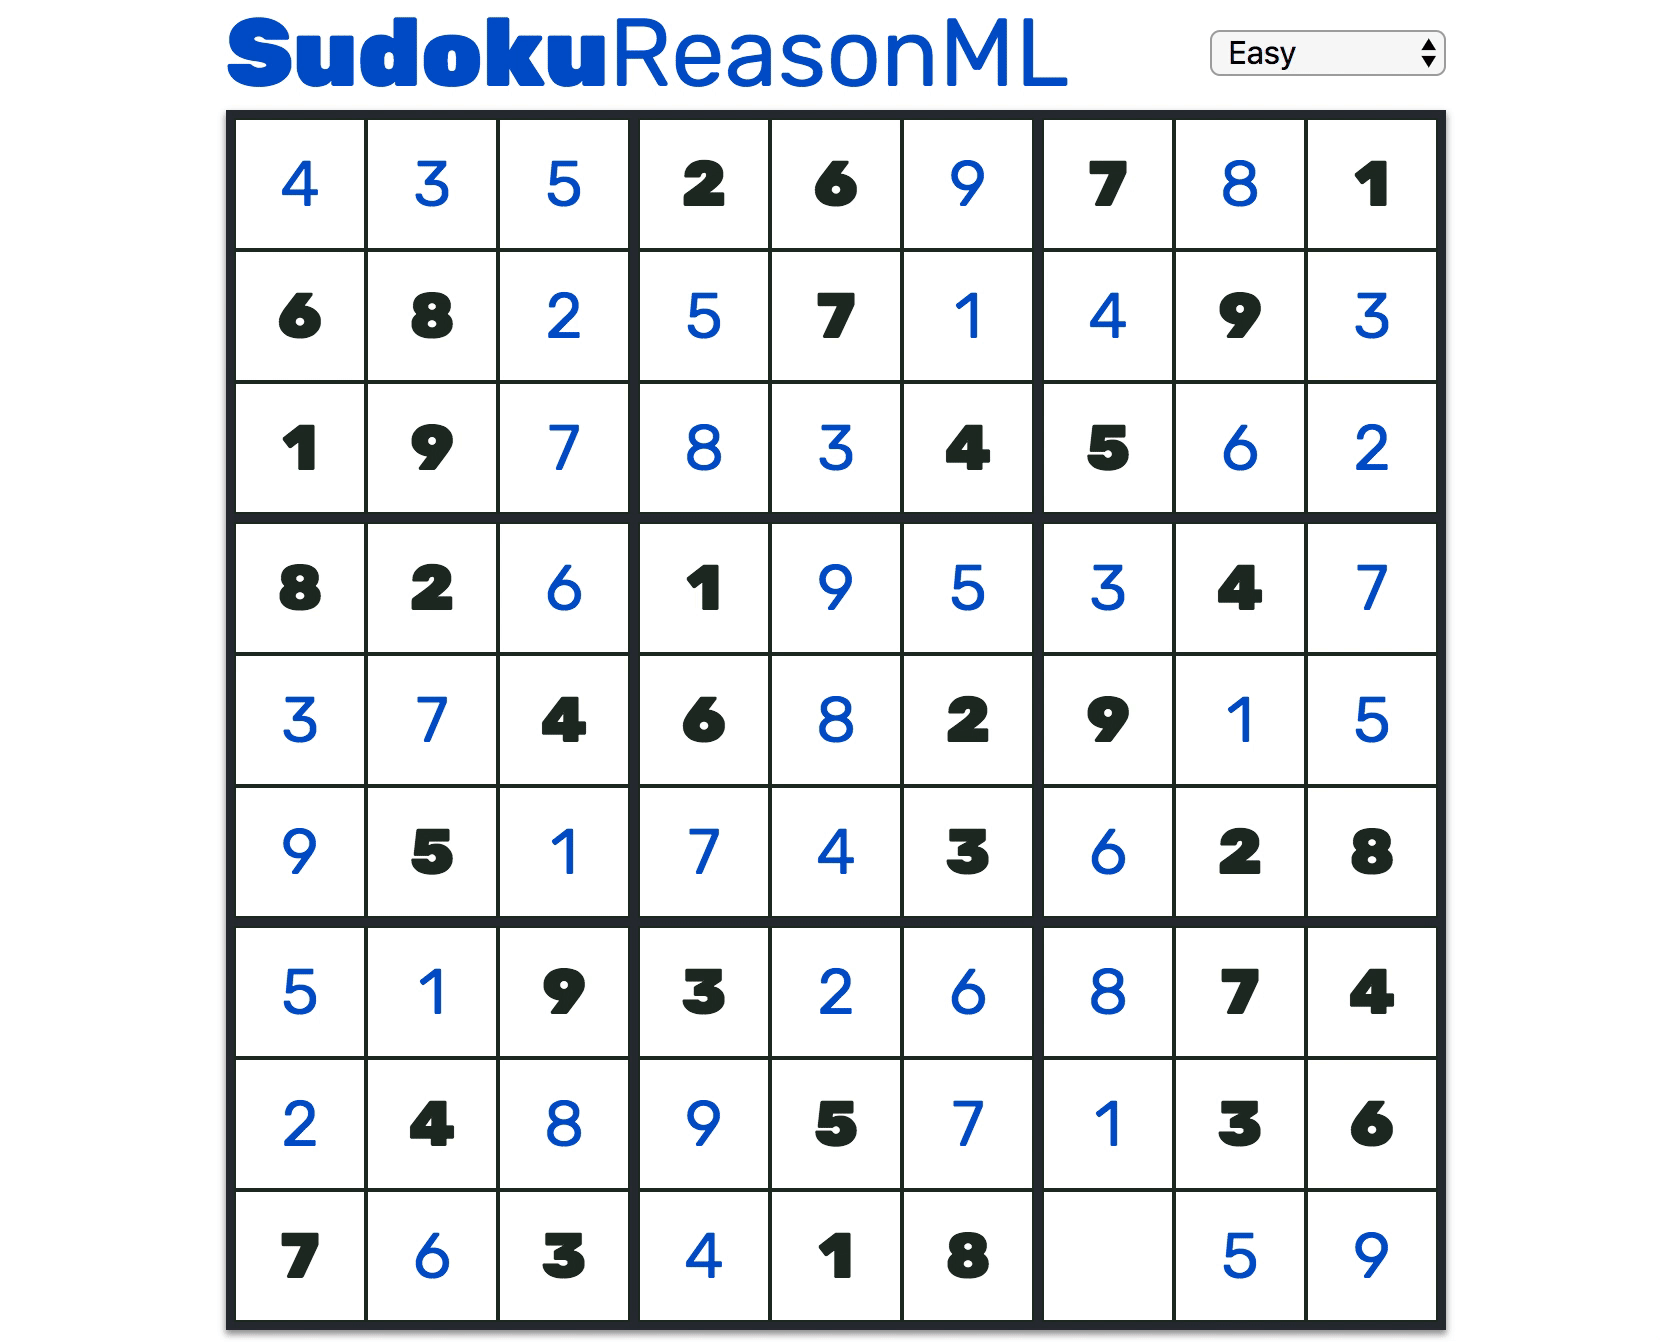 Demo of the Sudoku board